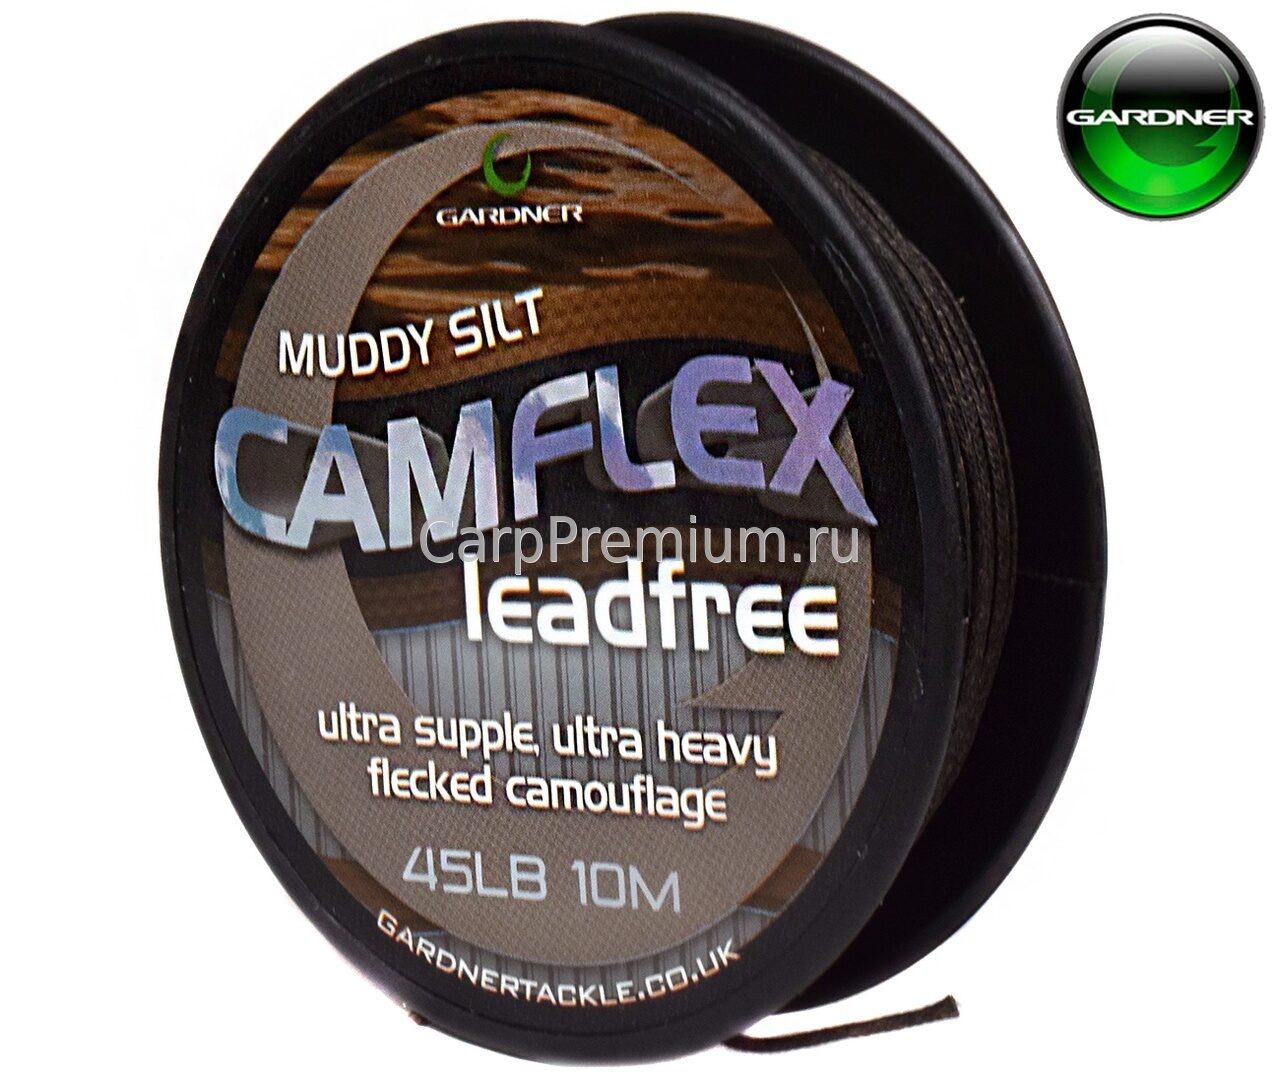 Лидкор без свинцового сердечника Серый Gardner (Гарднер) - CamFlex Leadfree Muddy Silt 20.4 кг / 45 lb, 10 м